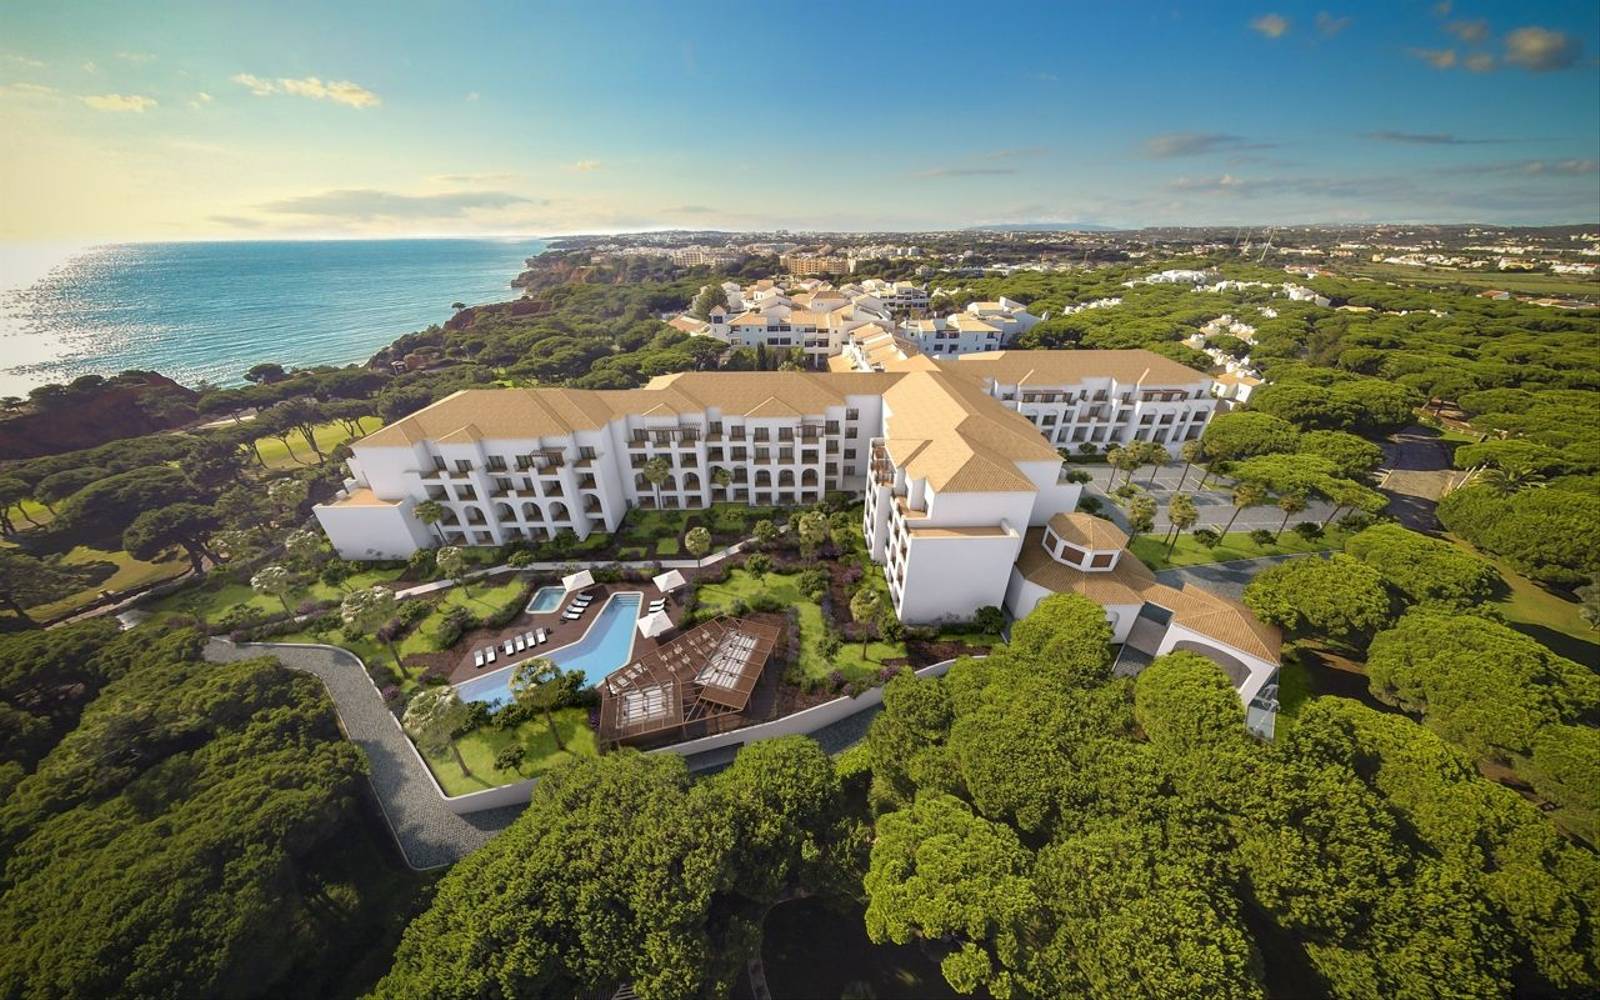 Pine Cliffs, a luxury collection resort in Portugal's Algarve region